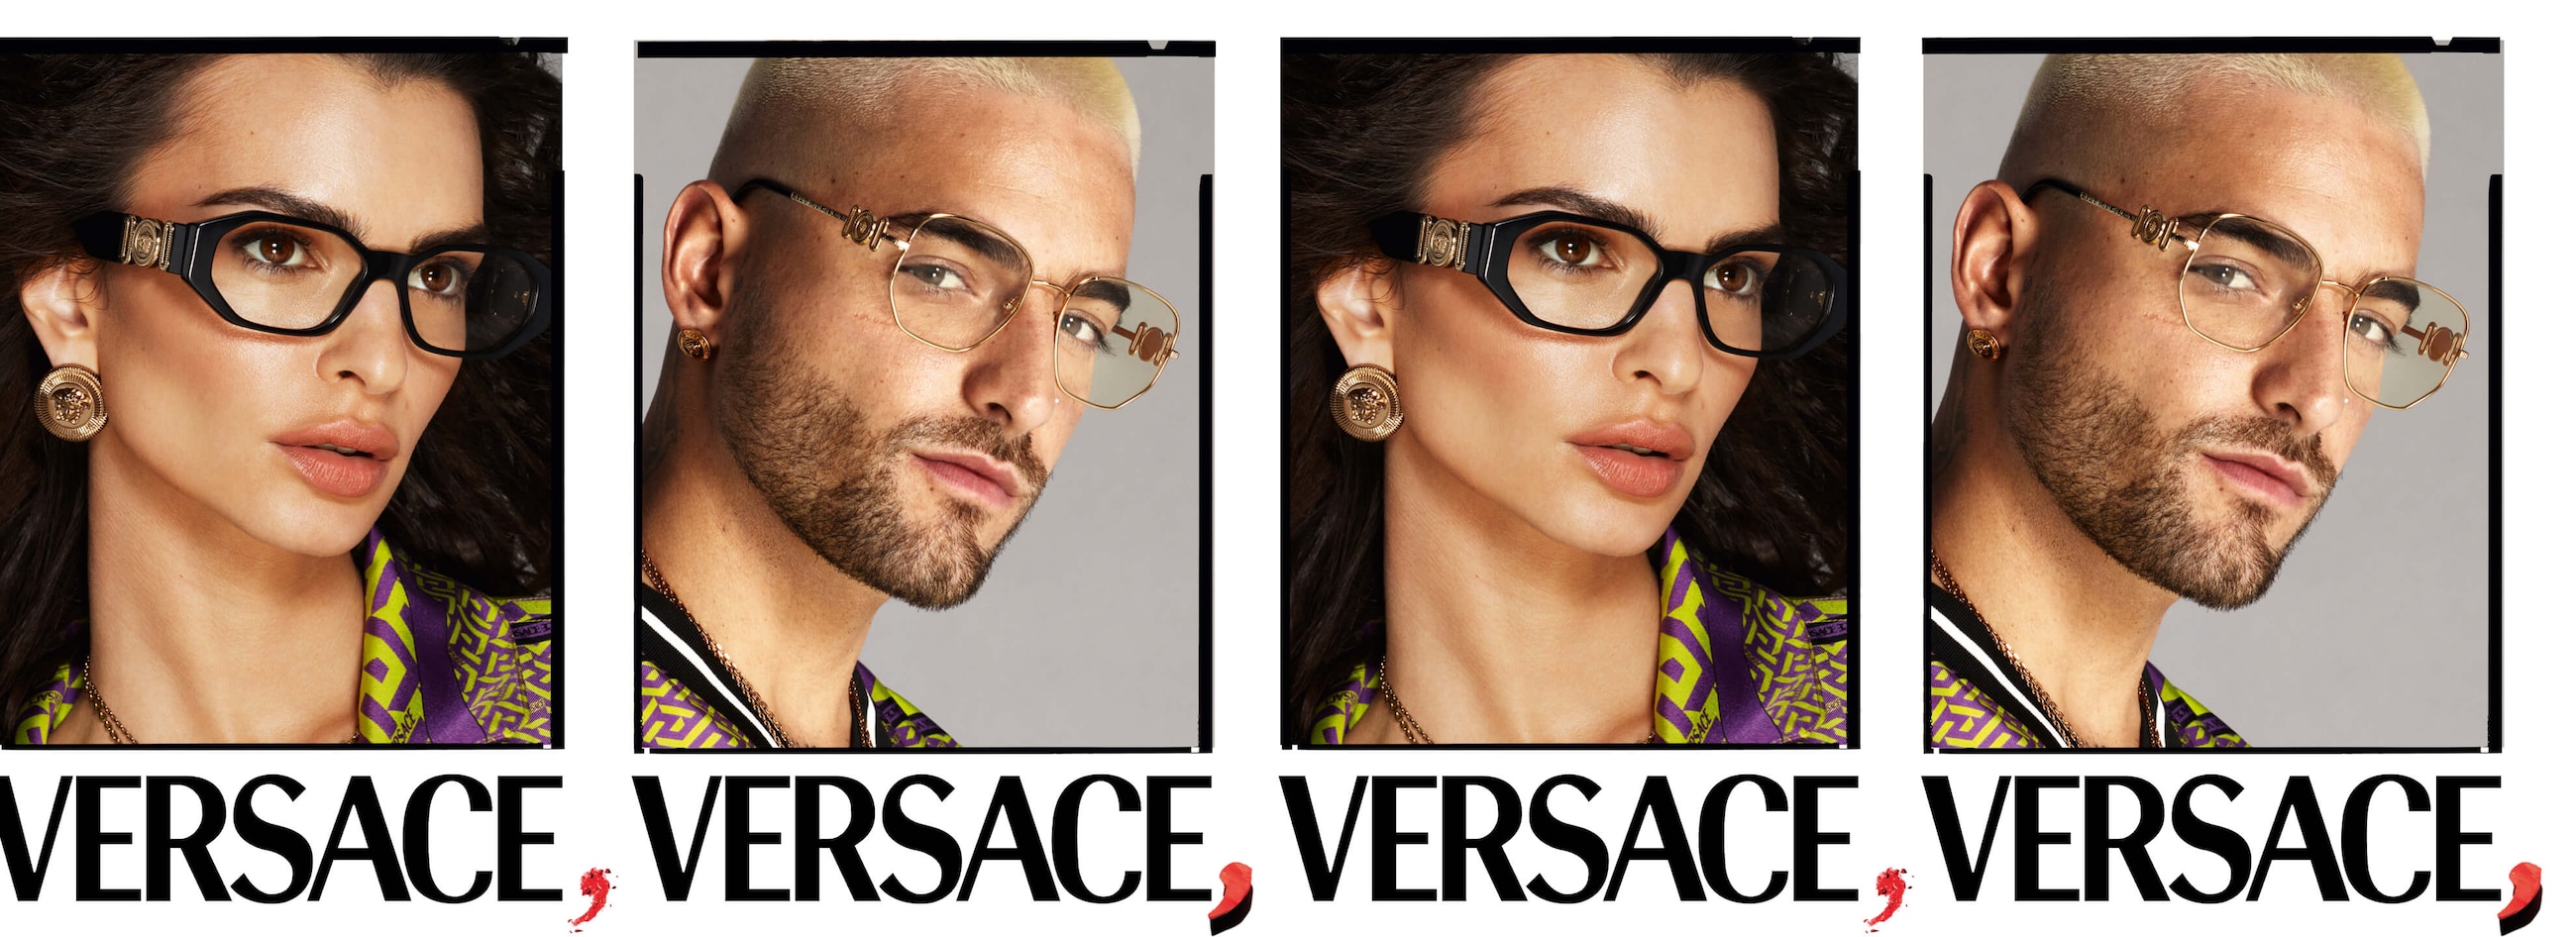 Versace image